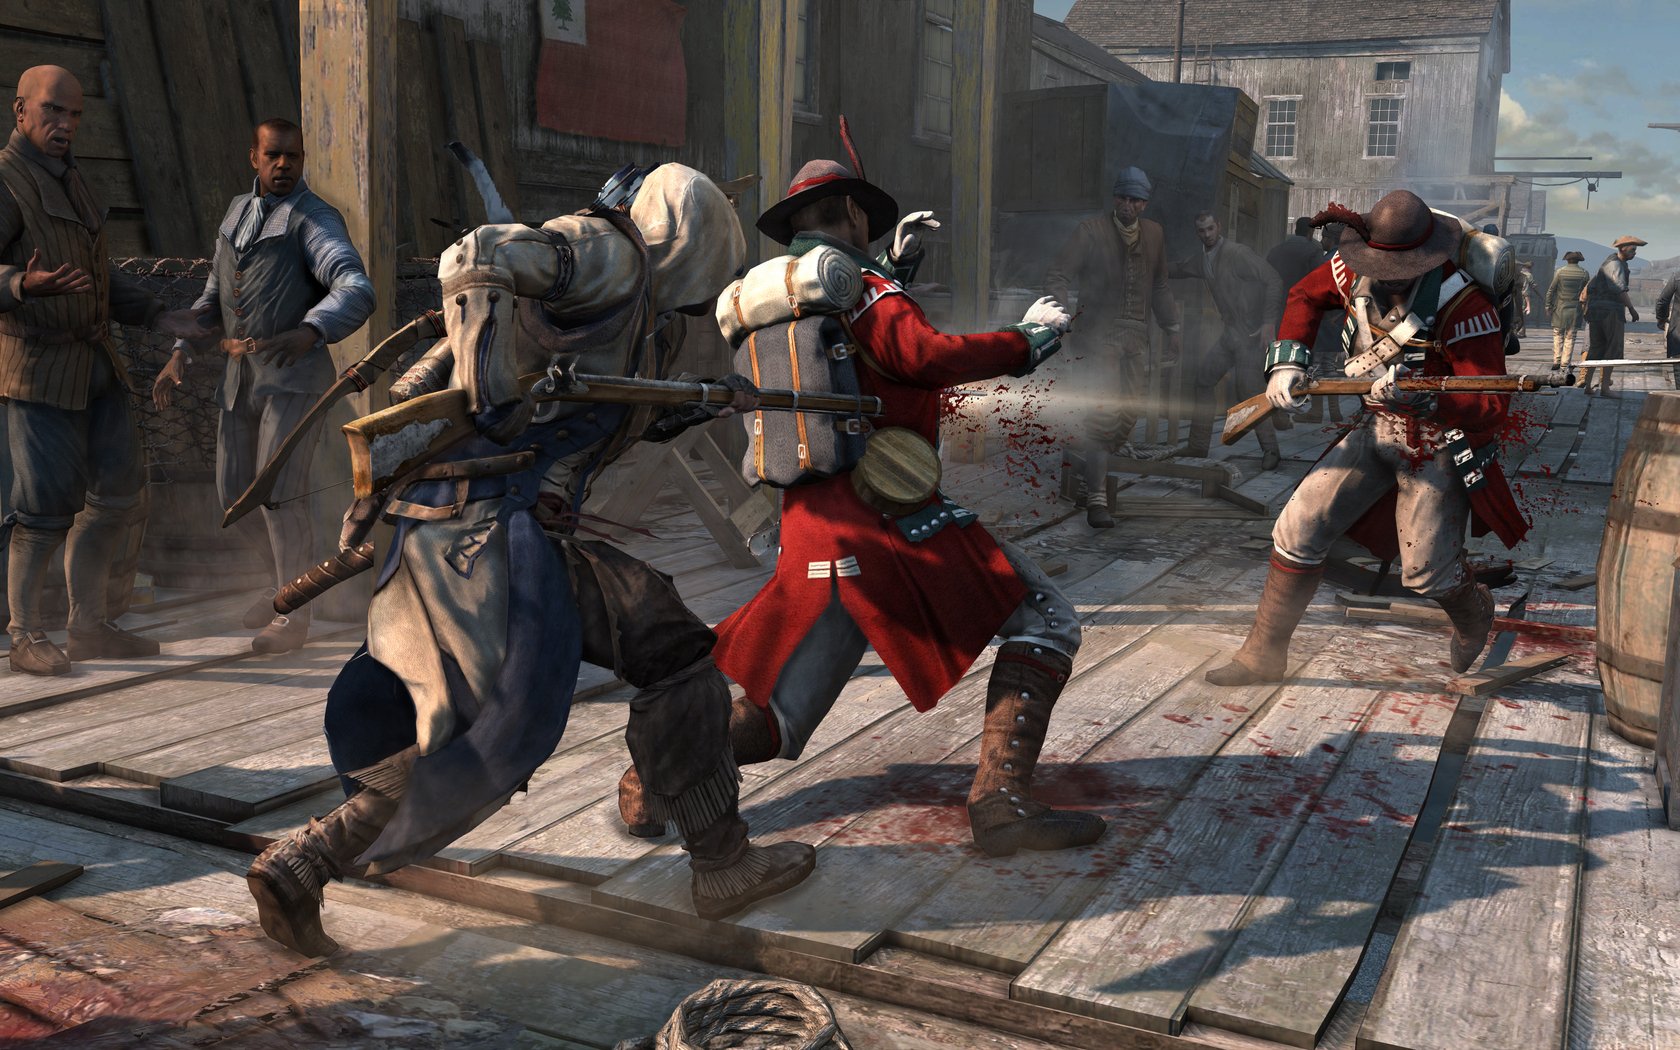 Ассасины игра видео. Ассасин Крид 3. Assassin s Creed игра 3. Assassin’s Creed III – 2012. Игра Assassins Creed 2012.